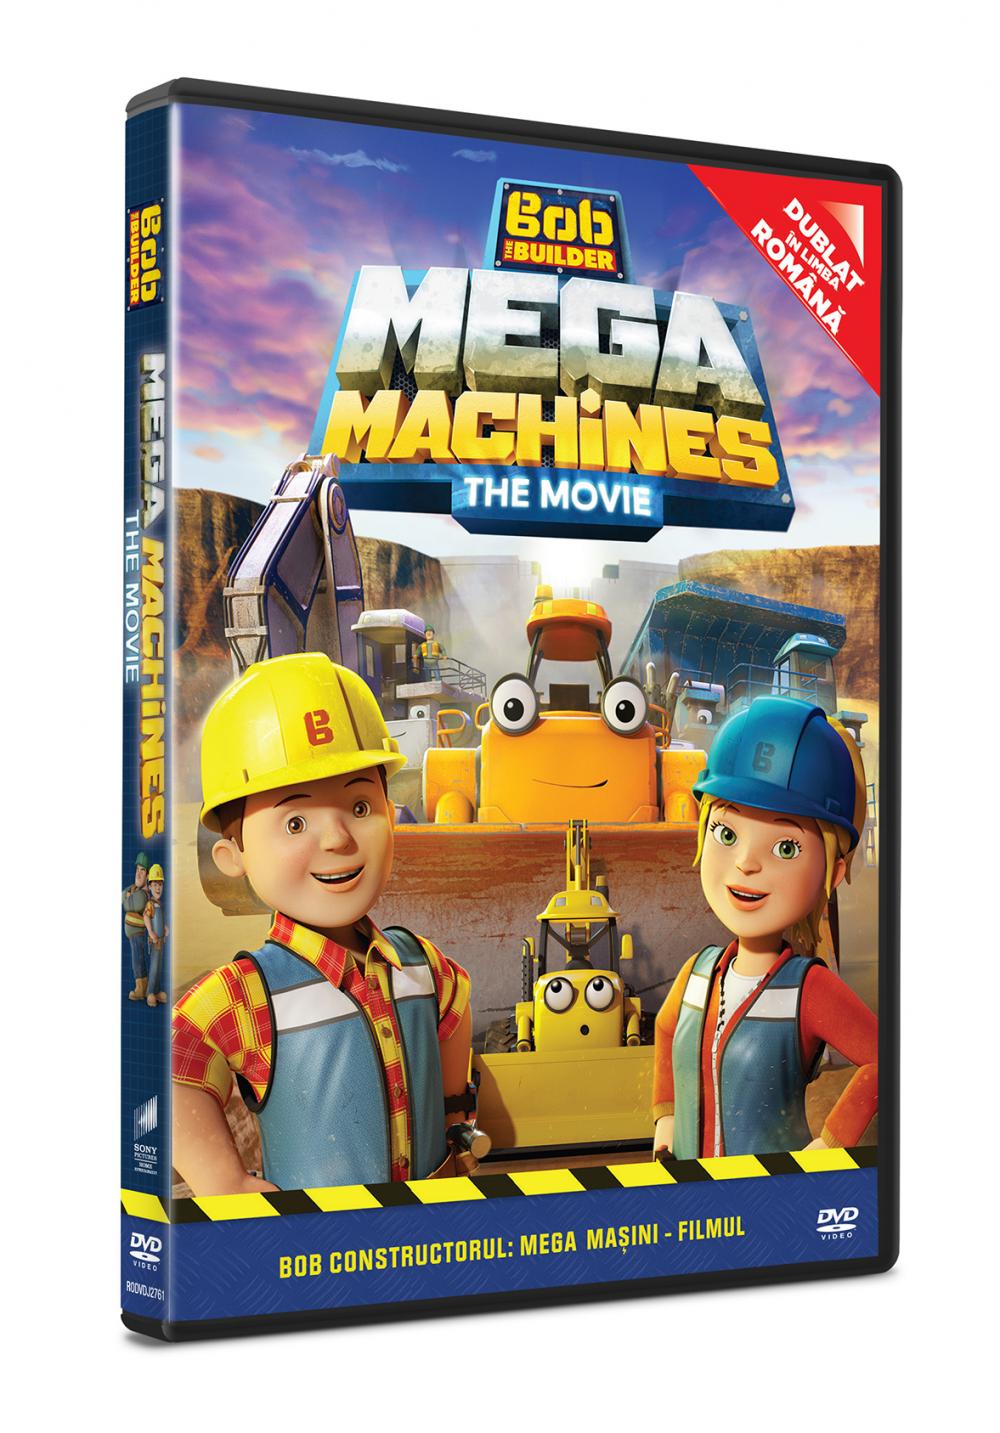 Bob Constructorul: Mega Masini - Filmul / Bob the Builder: Mega Machines